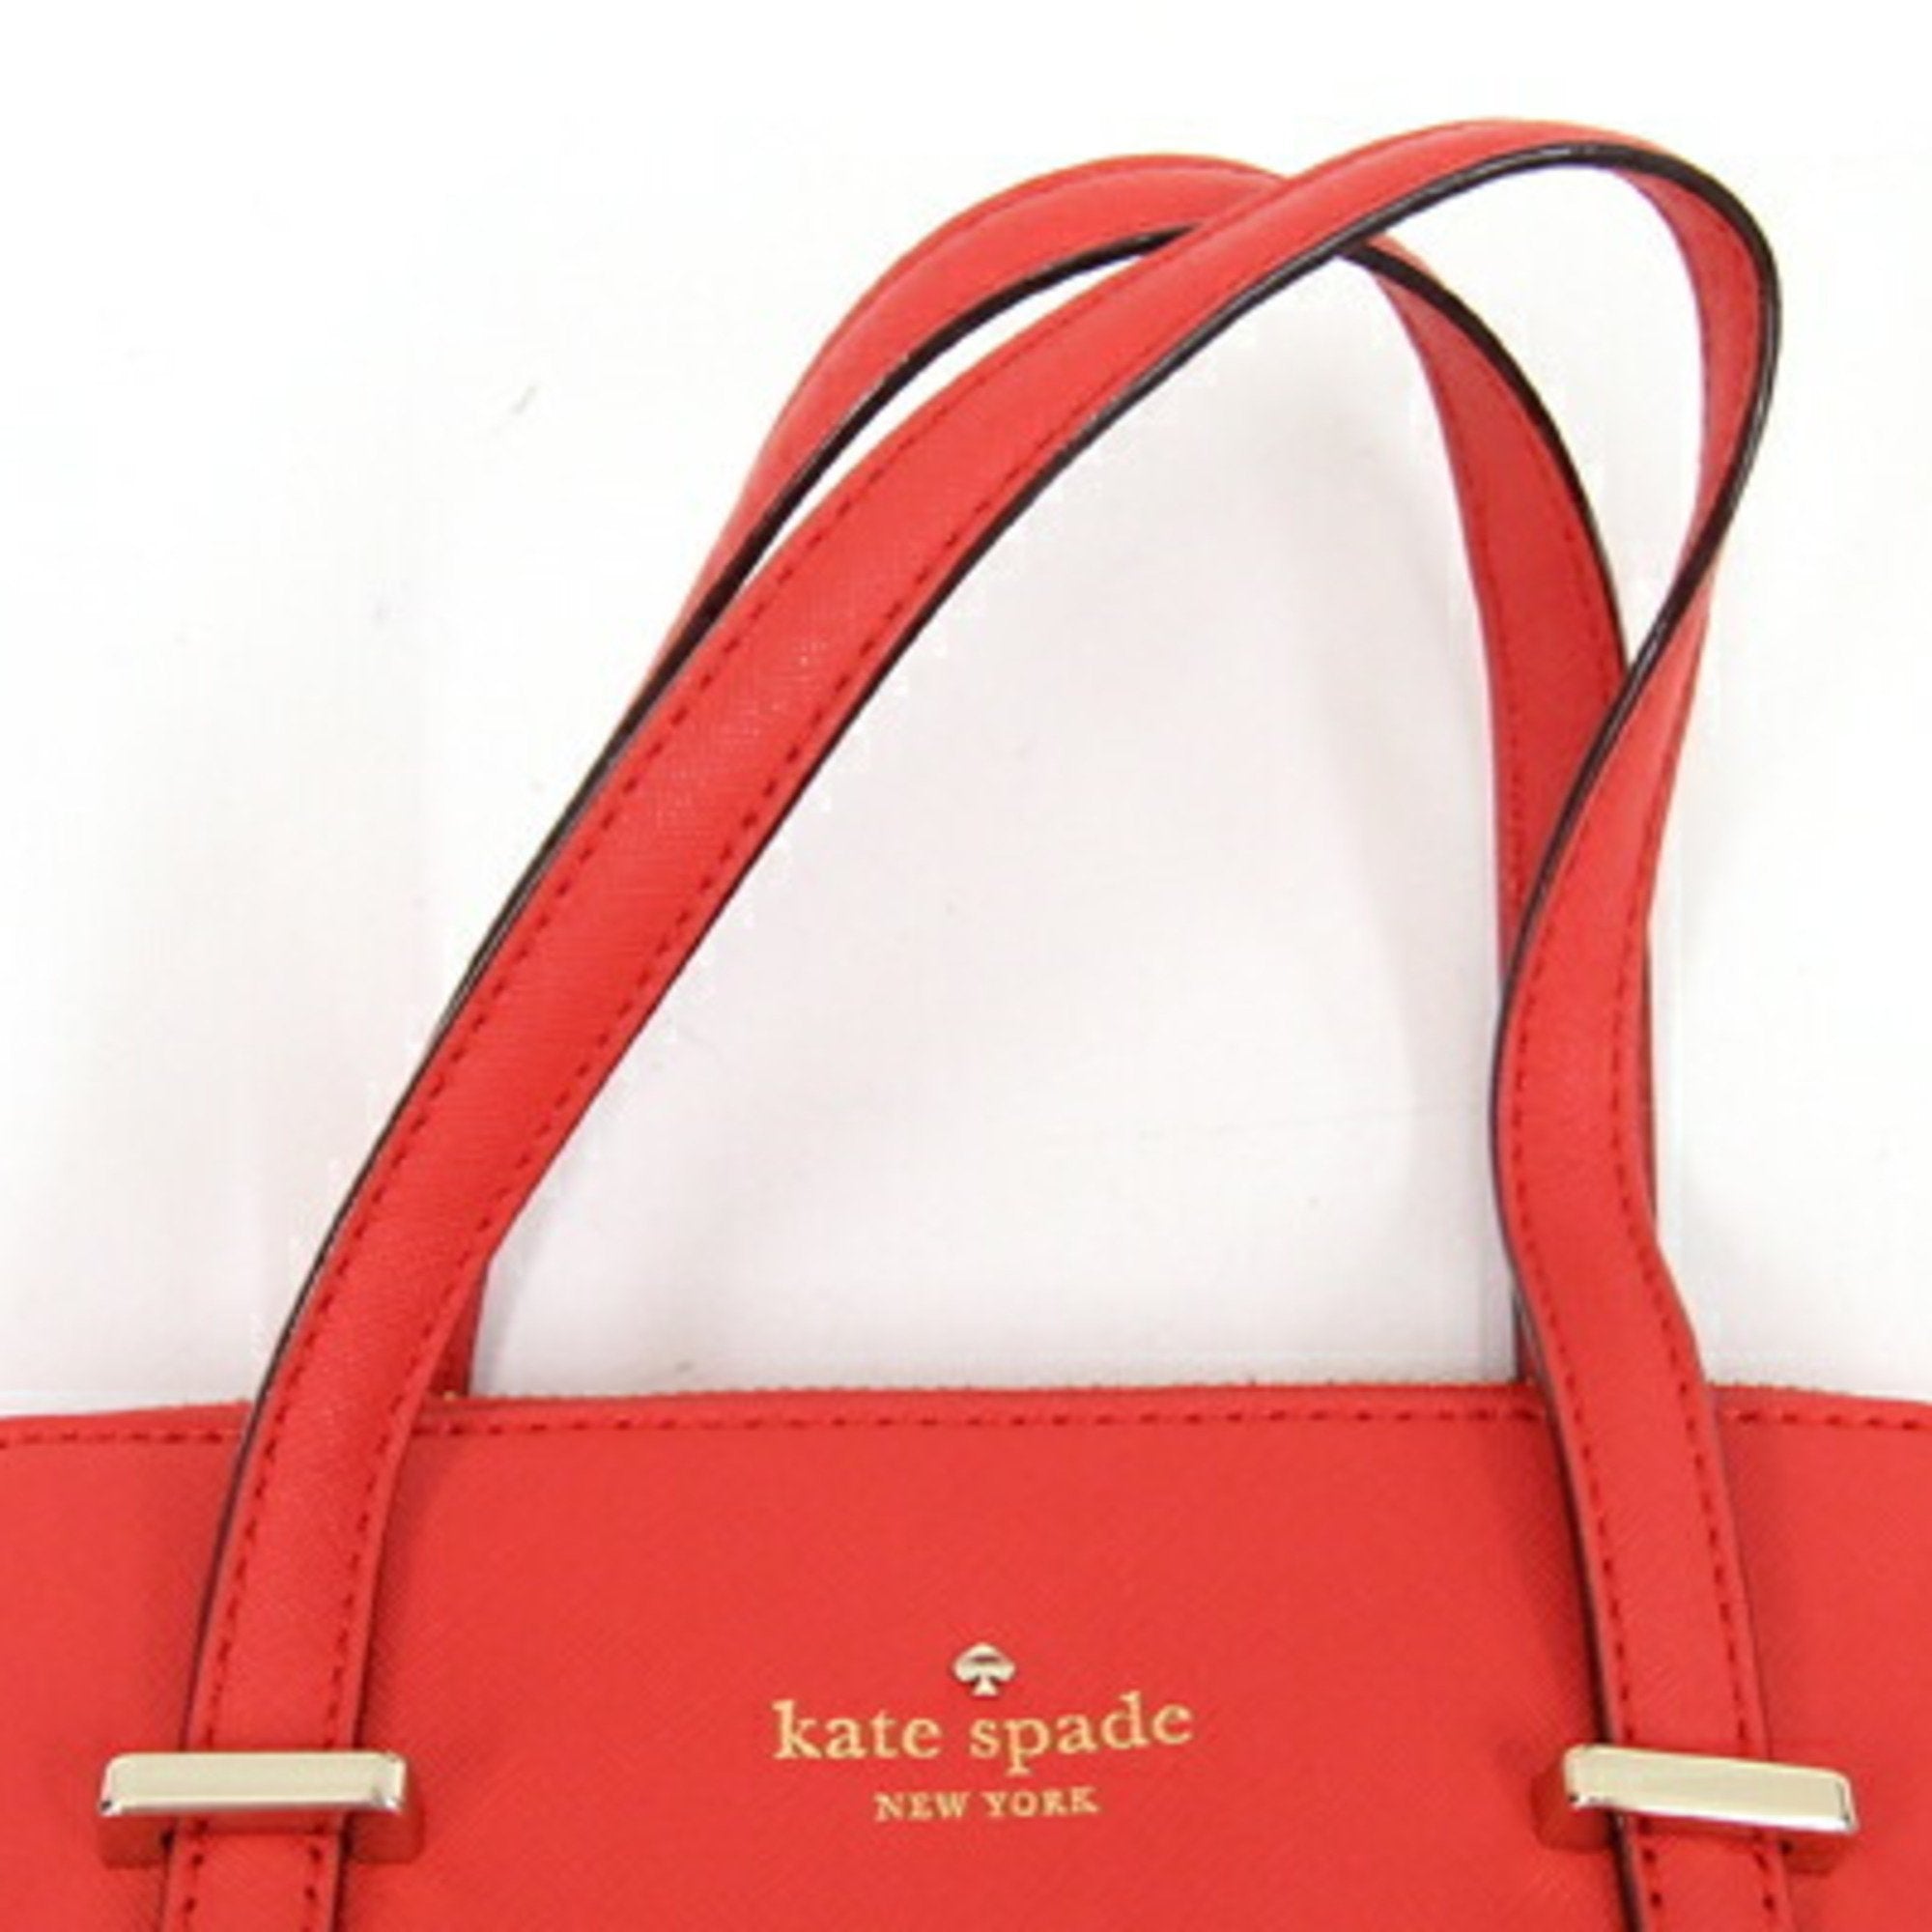 Kate spade handbag Red Kate spade handbag, I have... - Depop